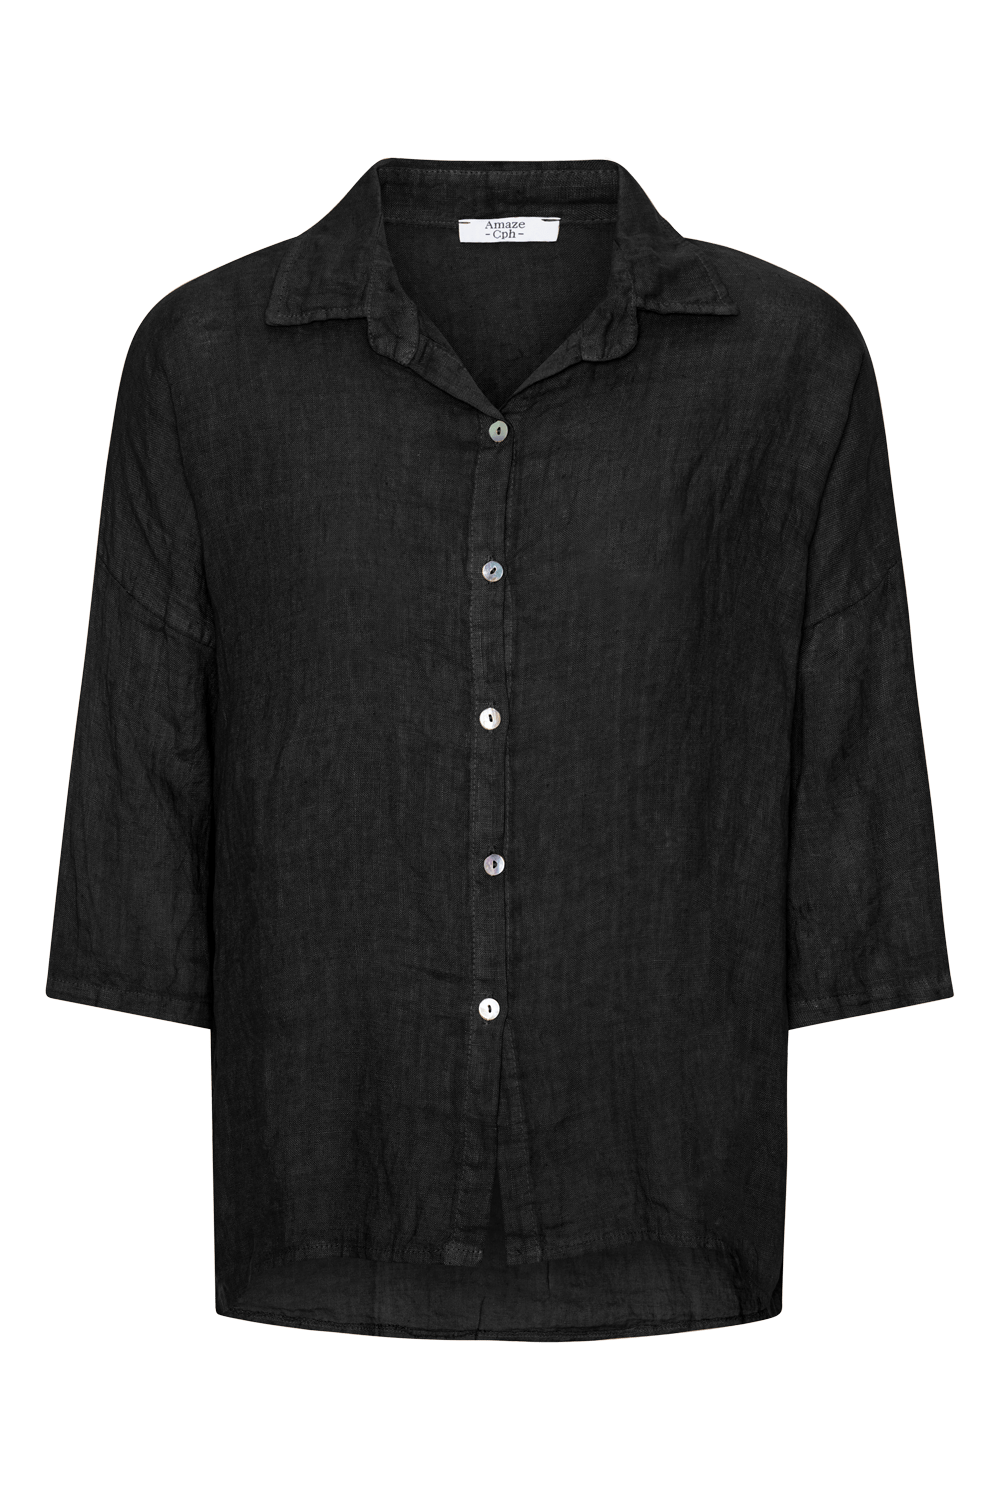 Linen New Classic - Black - Amaze Cph - Black - One Size